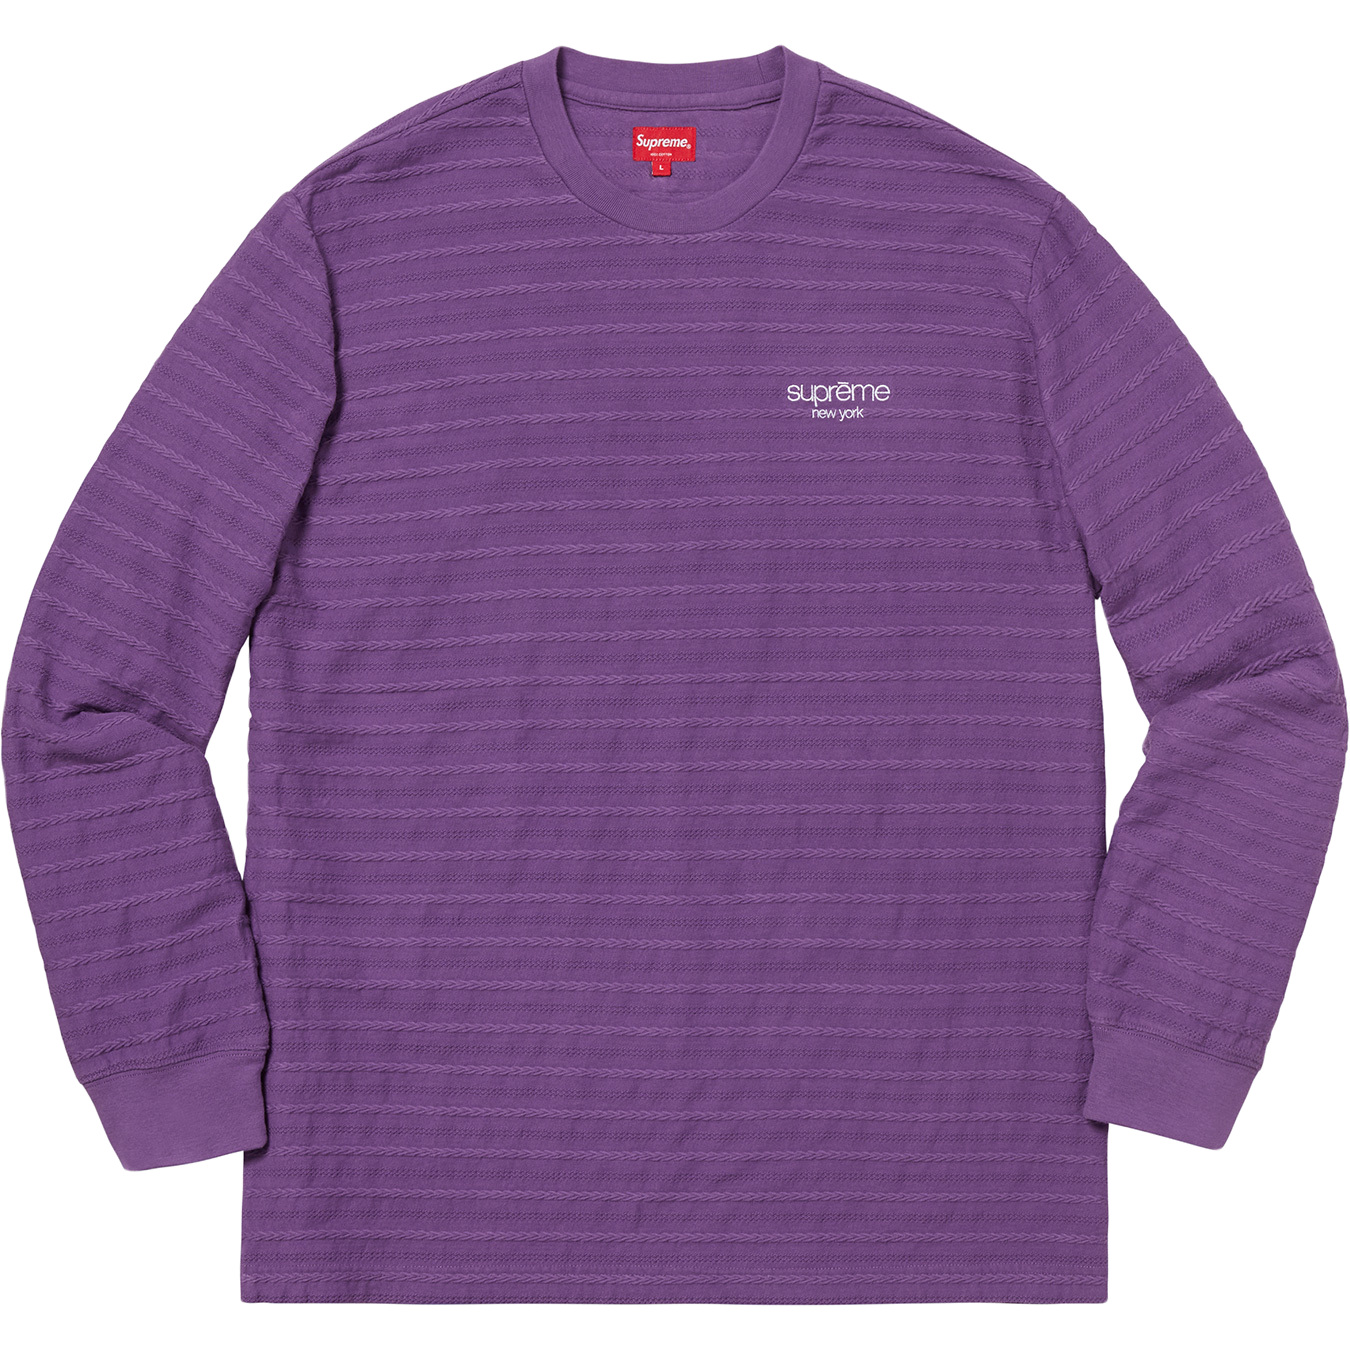 Supreme Rope Stripe Long Sleeve Top - Purple